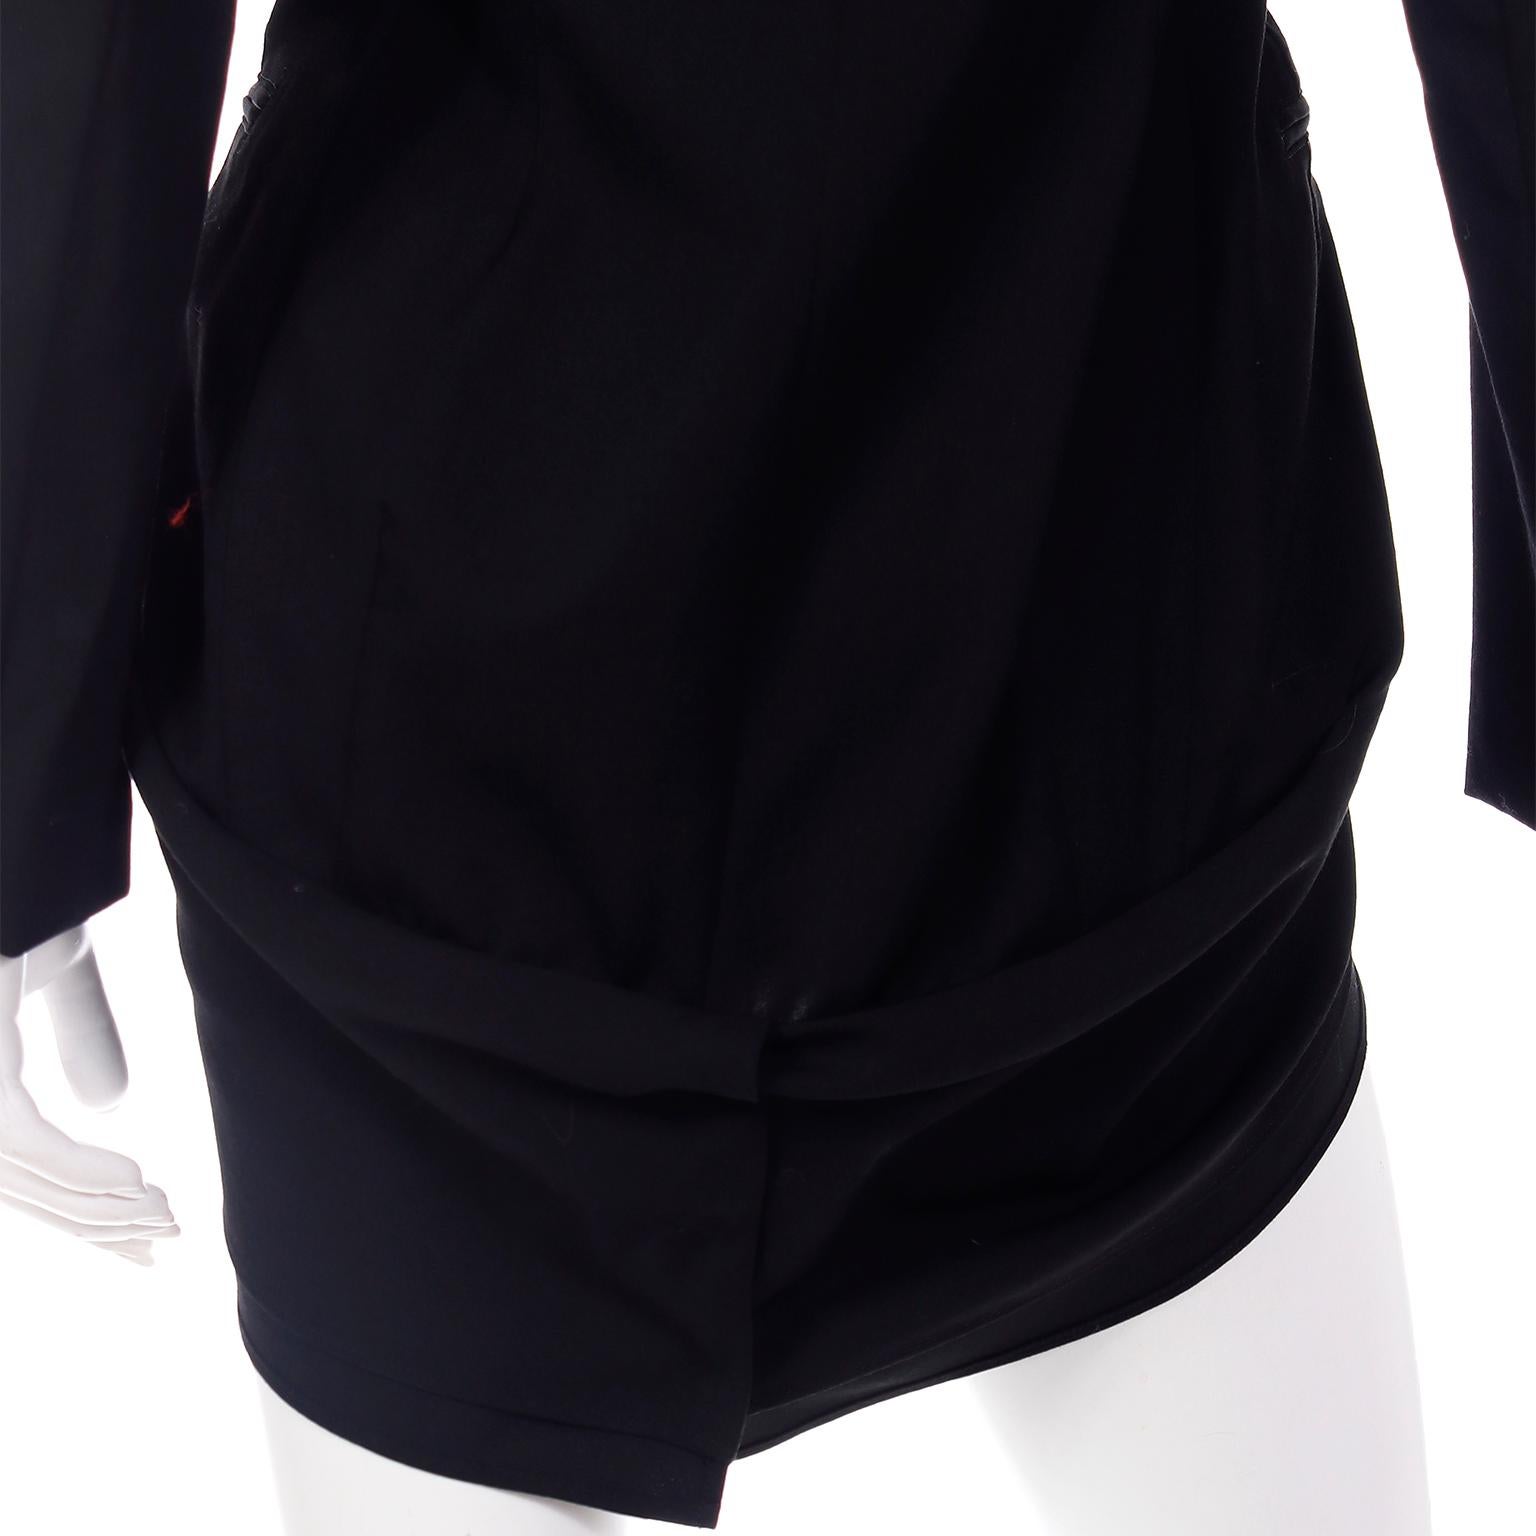 Yohji Yamamoto Black Wool Tuxedo Style Jacket W Zipper Button Holes & Pockets For Sale 4